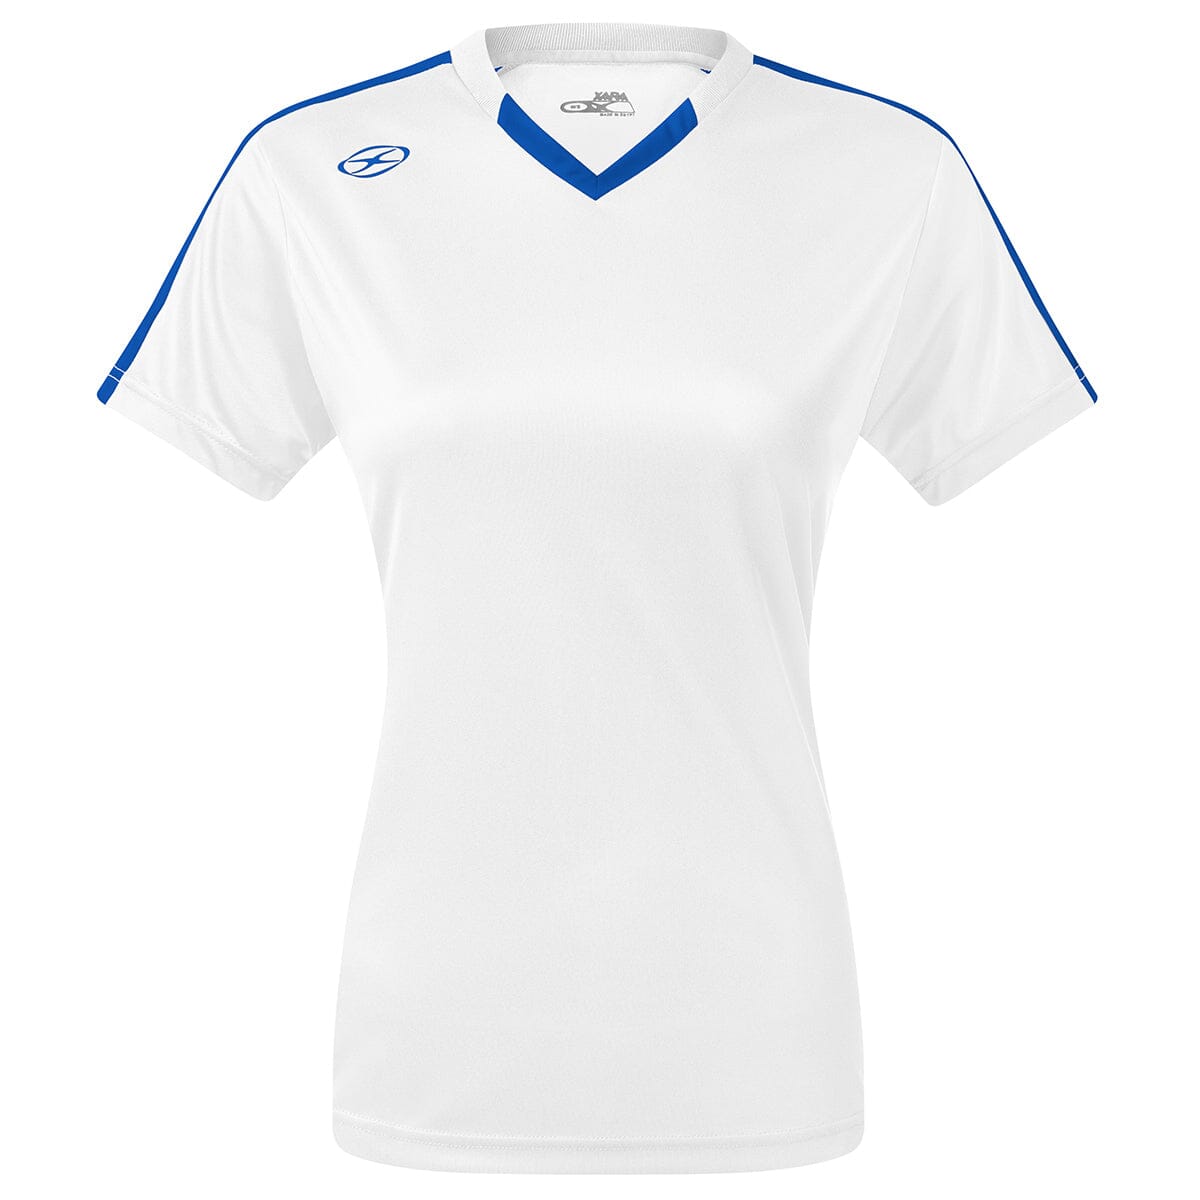 Britannia Jersey - Away Colors - Female Shirt Xara Soccer White/Royal Womens Youth Medium 